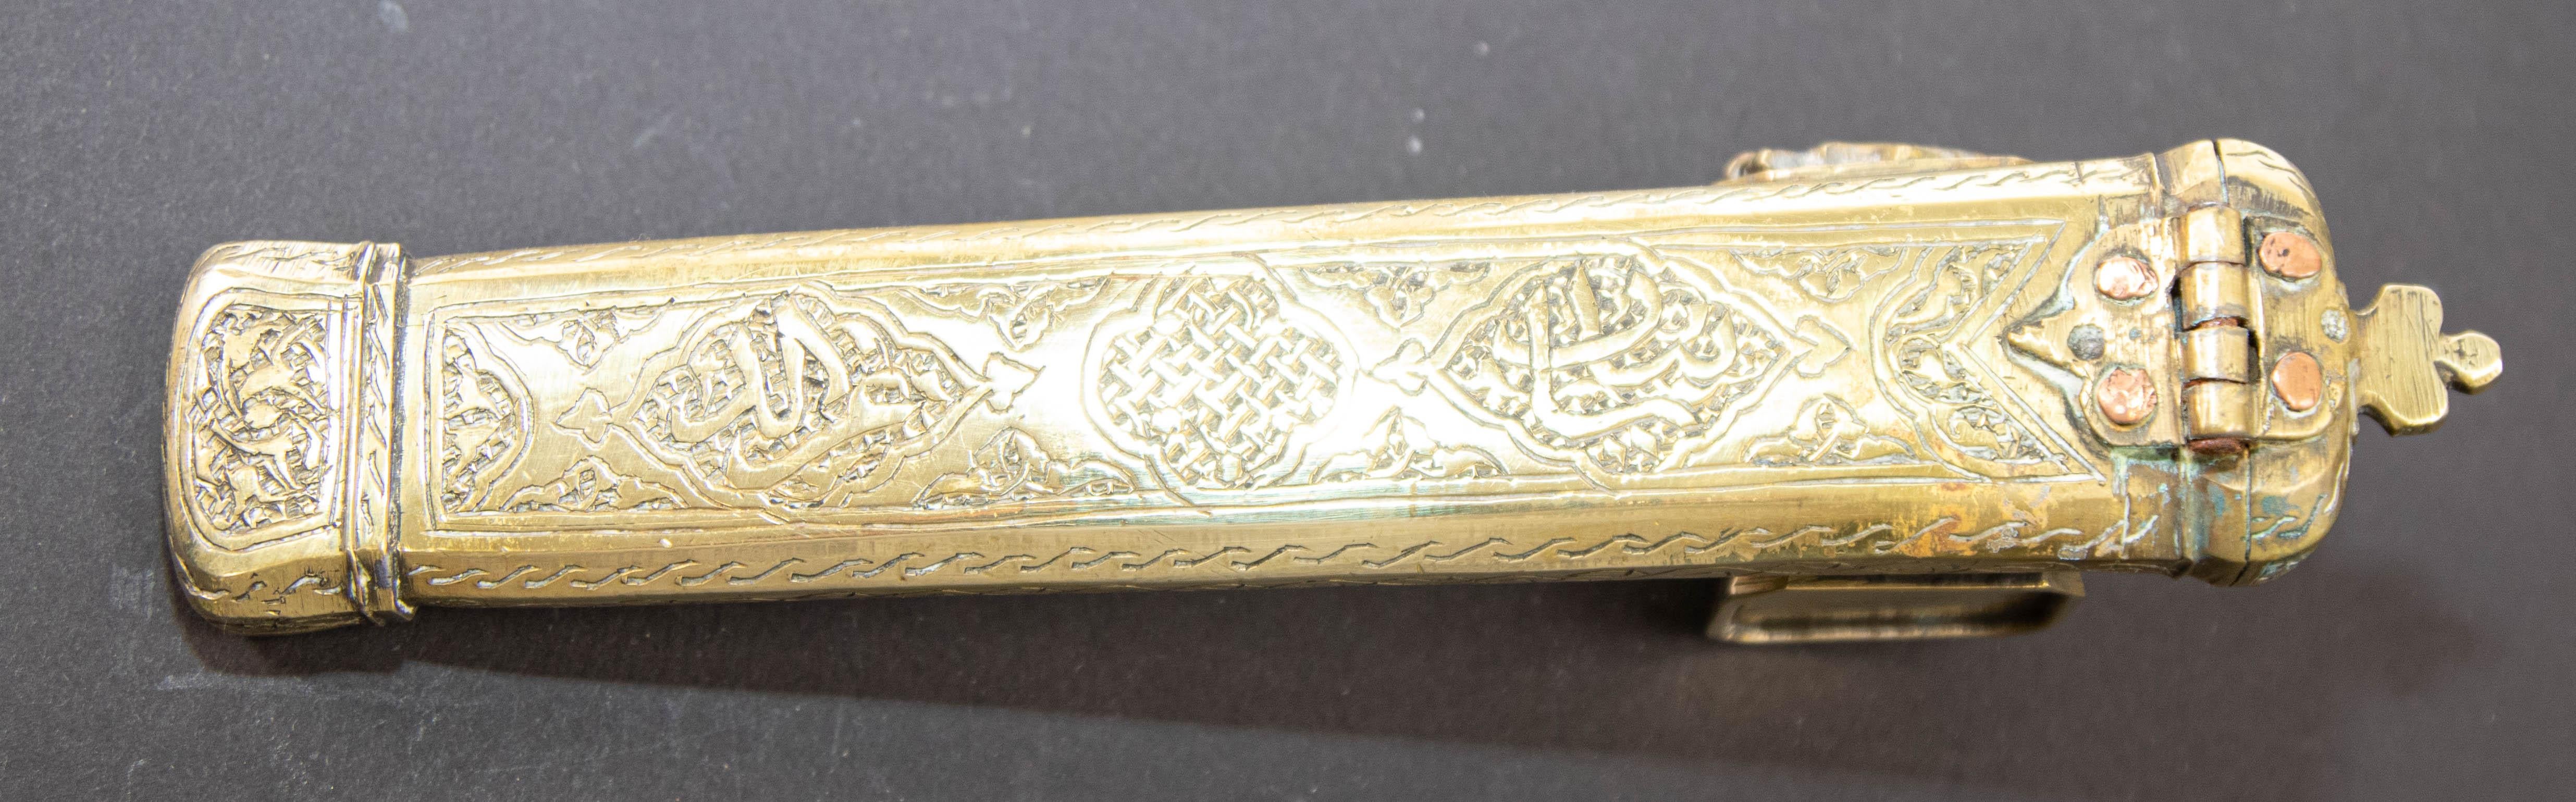 Antique Ottoman Turkish Brass Inkwell Qalamdan with Arabic Calligraphy Writing For Sale 6